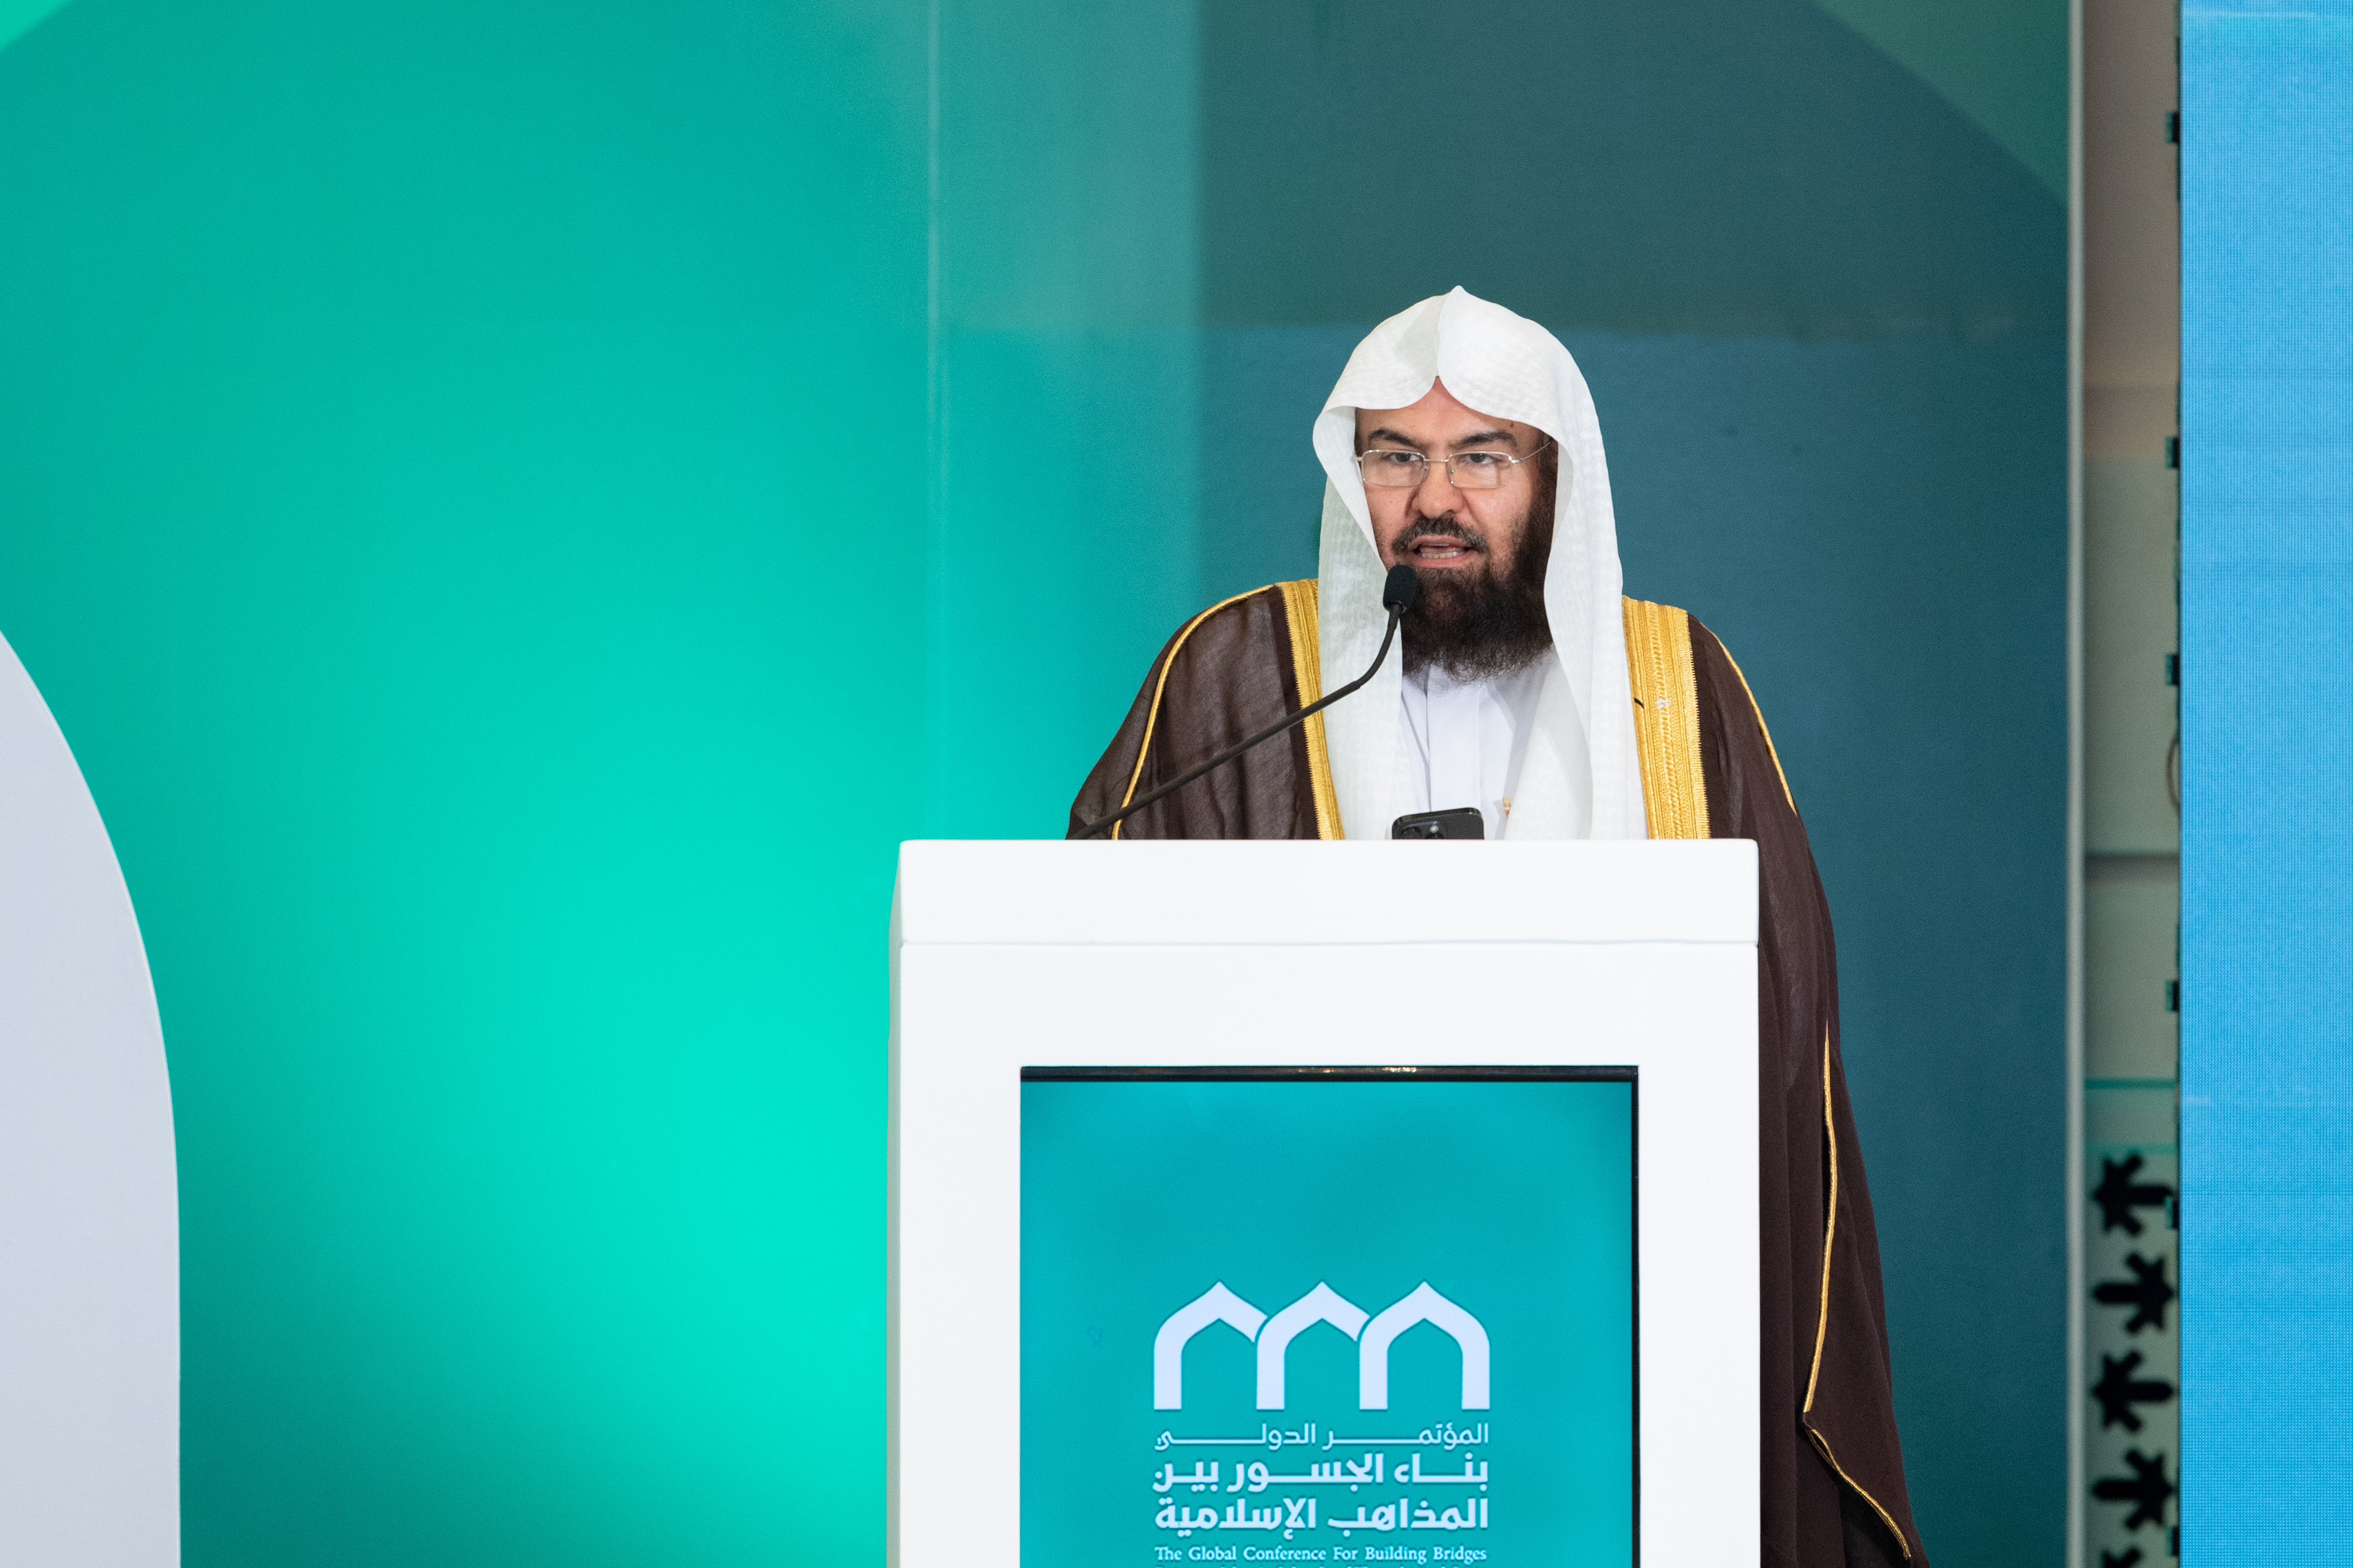 Yang Mulia Syekh Dr. Abdul Rahman bin Abdulaziz Al-Sudais, Ketua Urusan Agama Masjidil Haram dan Masjid Nabawi, Imam dan Khatib Masjidil Haram, dalam pidatonya pada sesi penutupan konferensi: “Membangun Jembatan Antar Mazhab Islam”